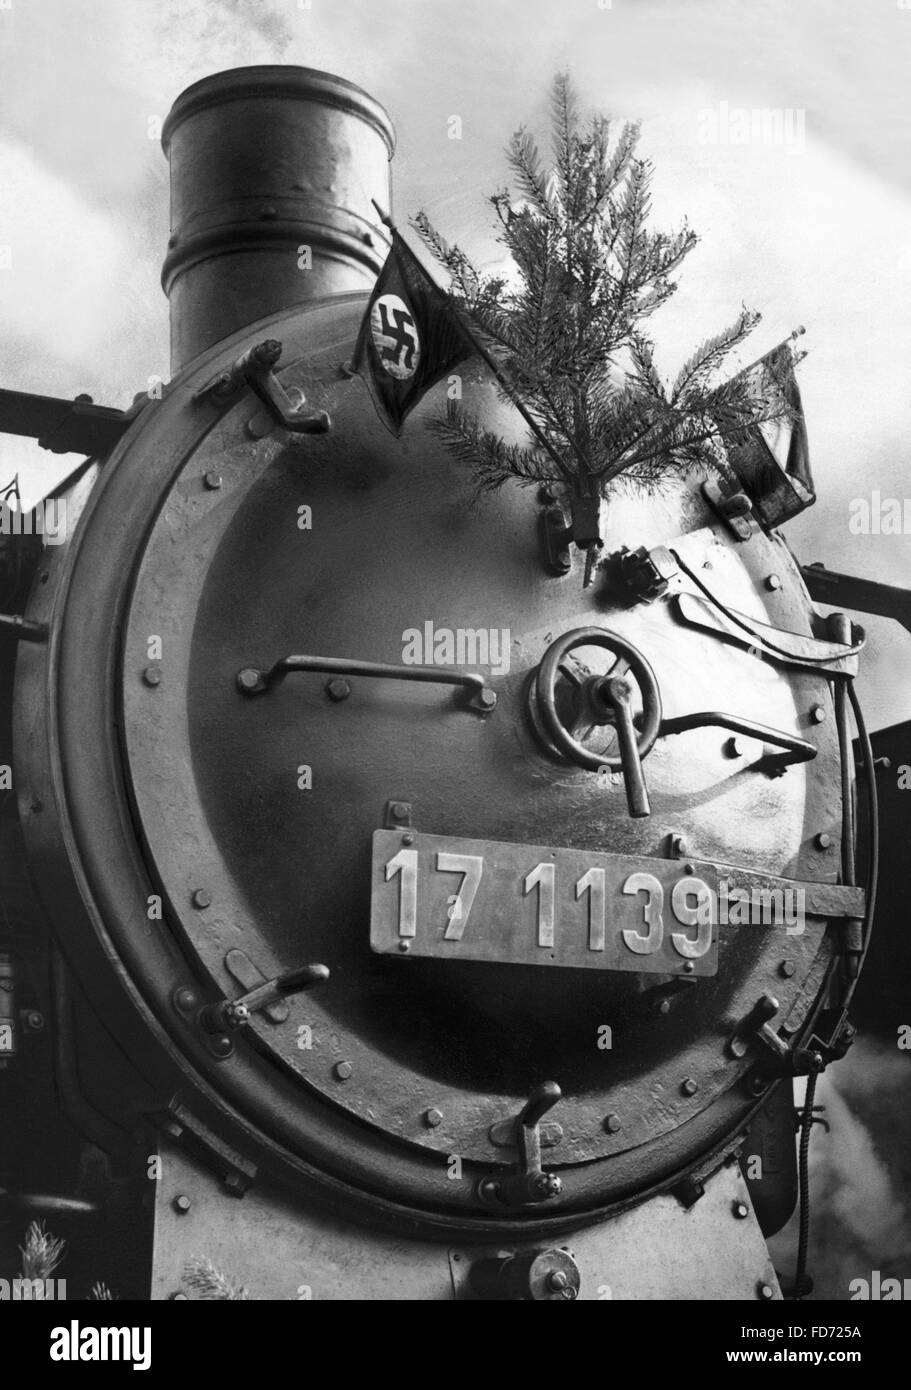 Steam locomotive in Germany, 1935 Stock Photo